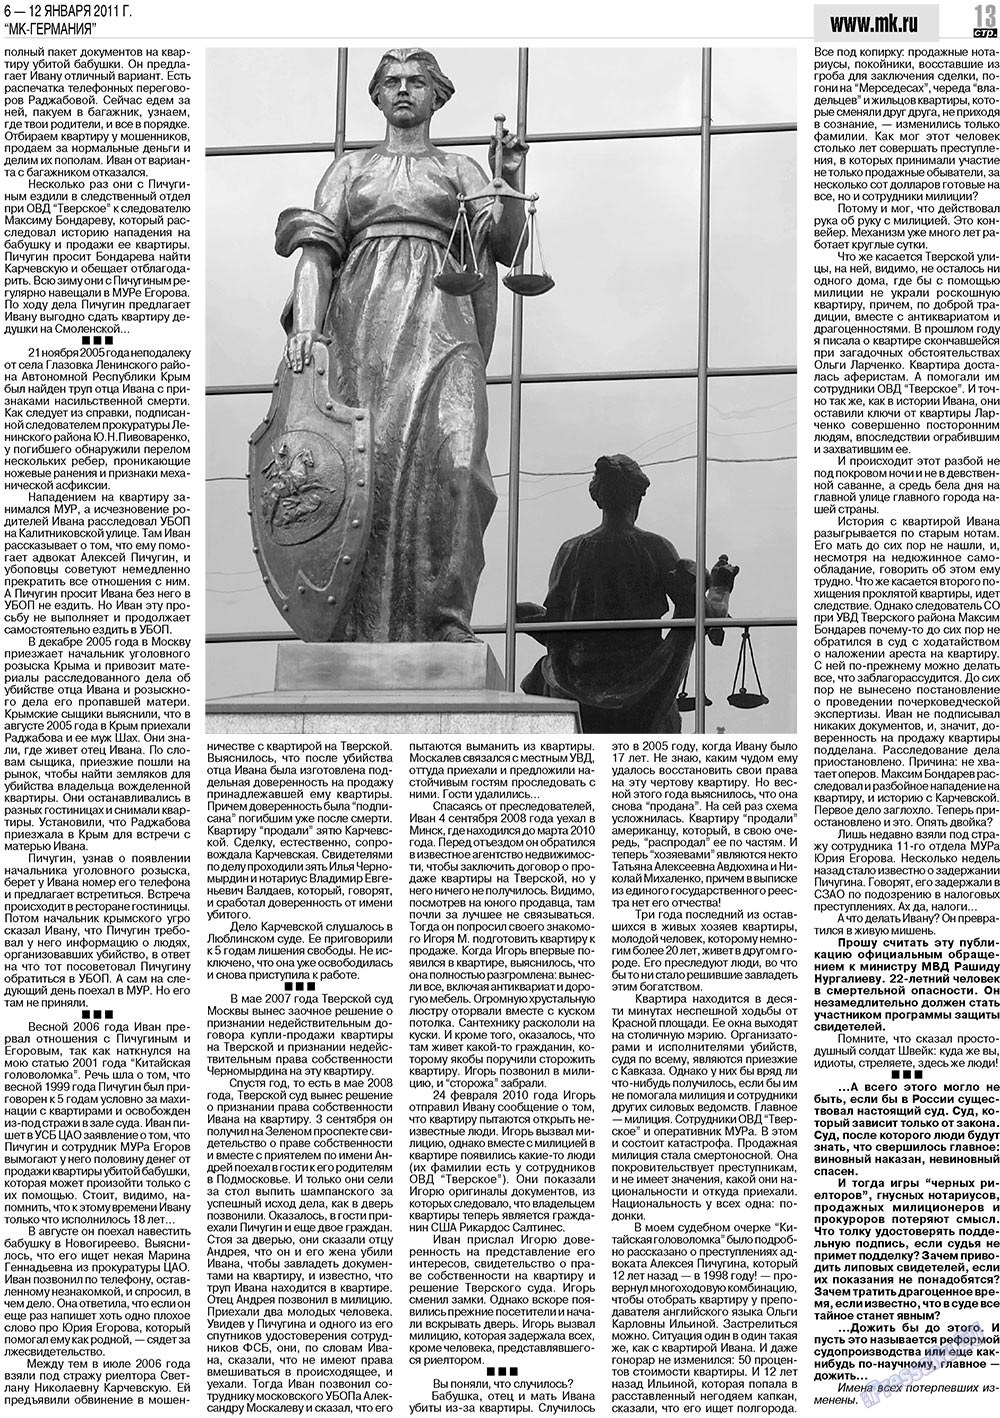 МК-Германия, газета. 2011 №1 стр.13